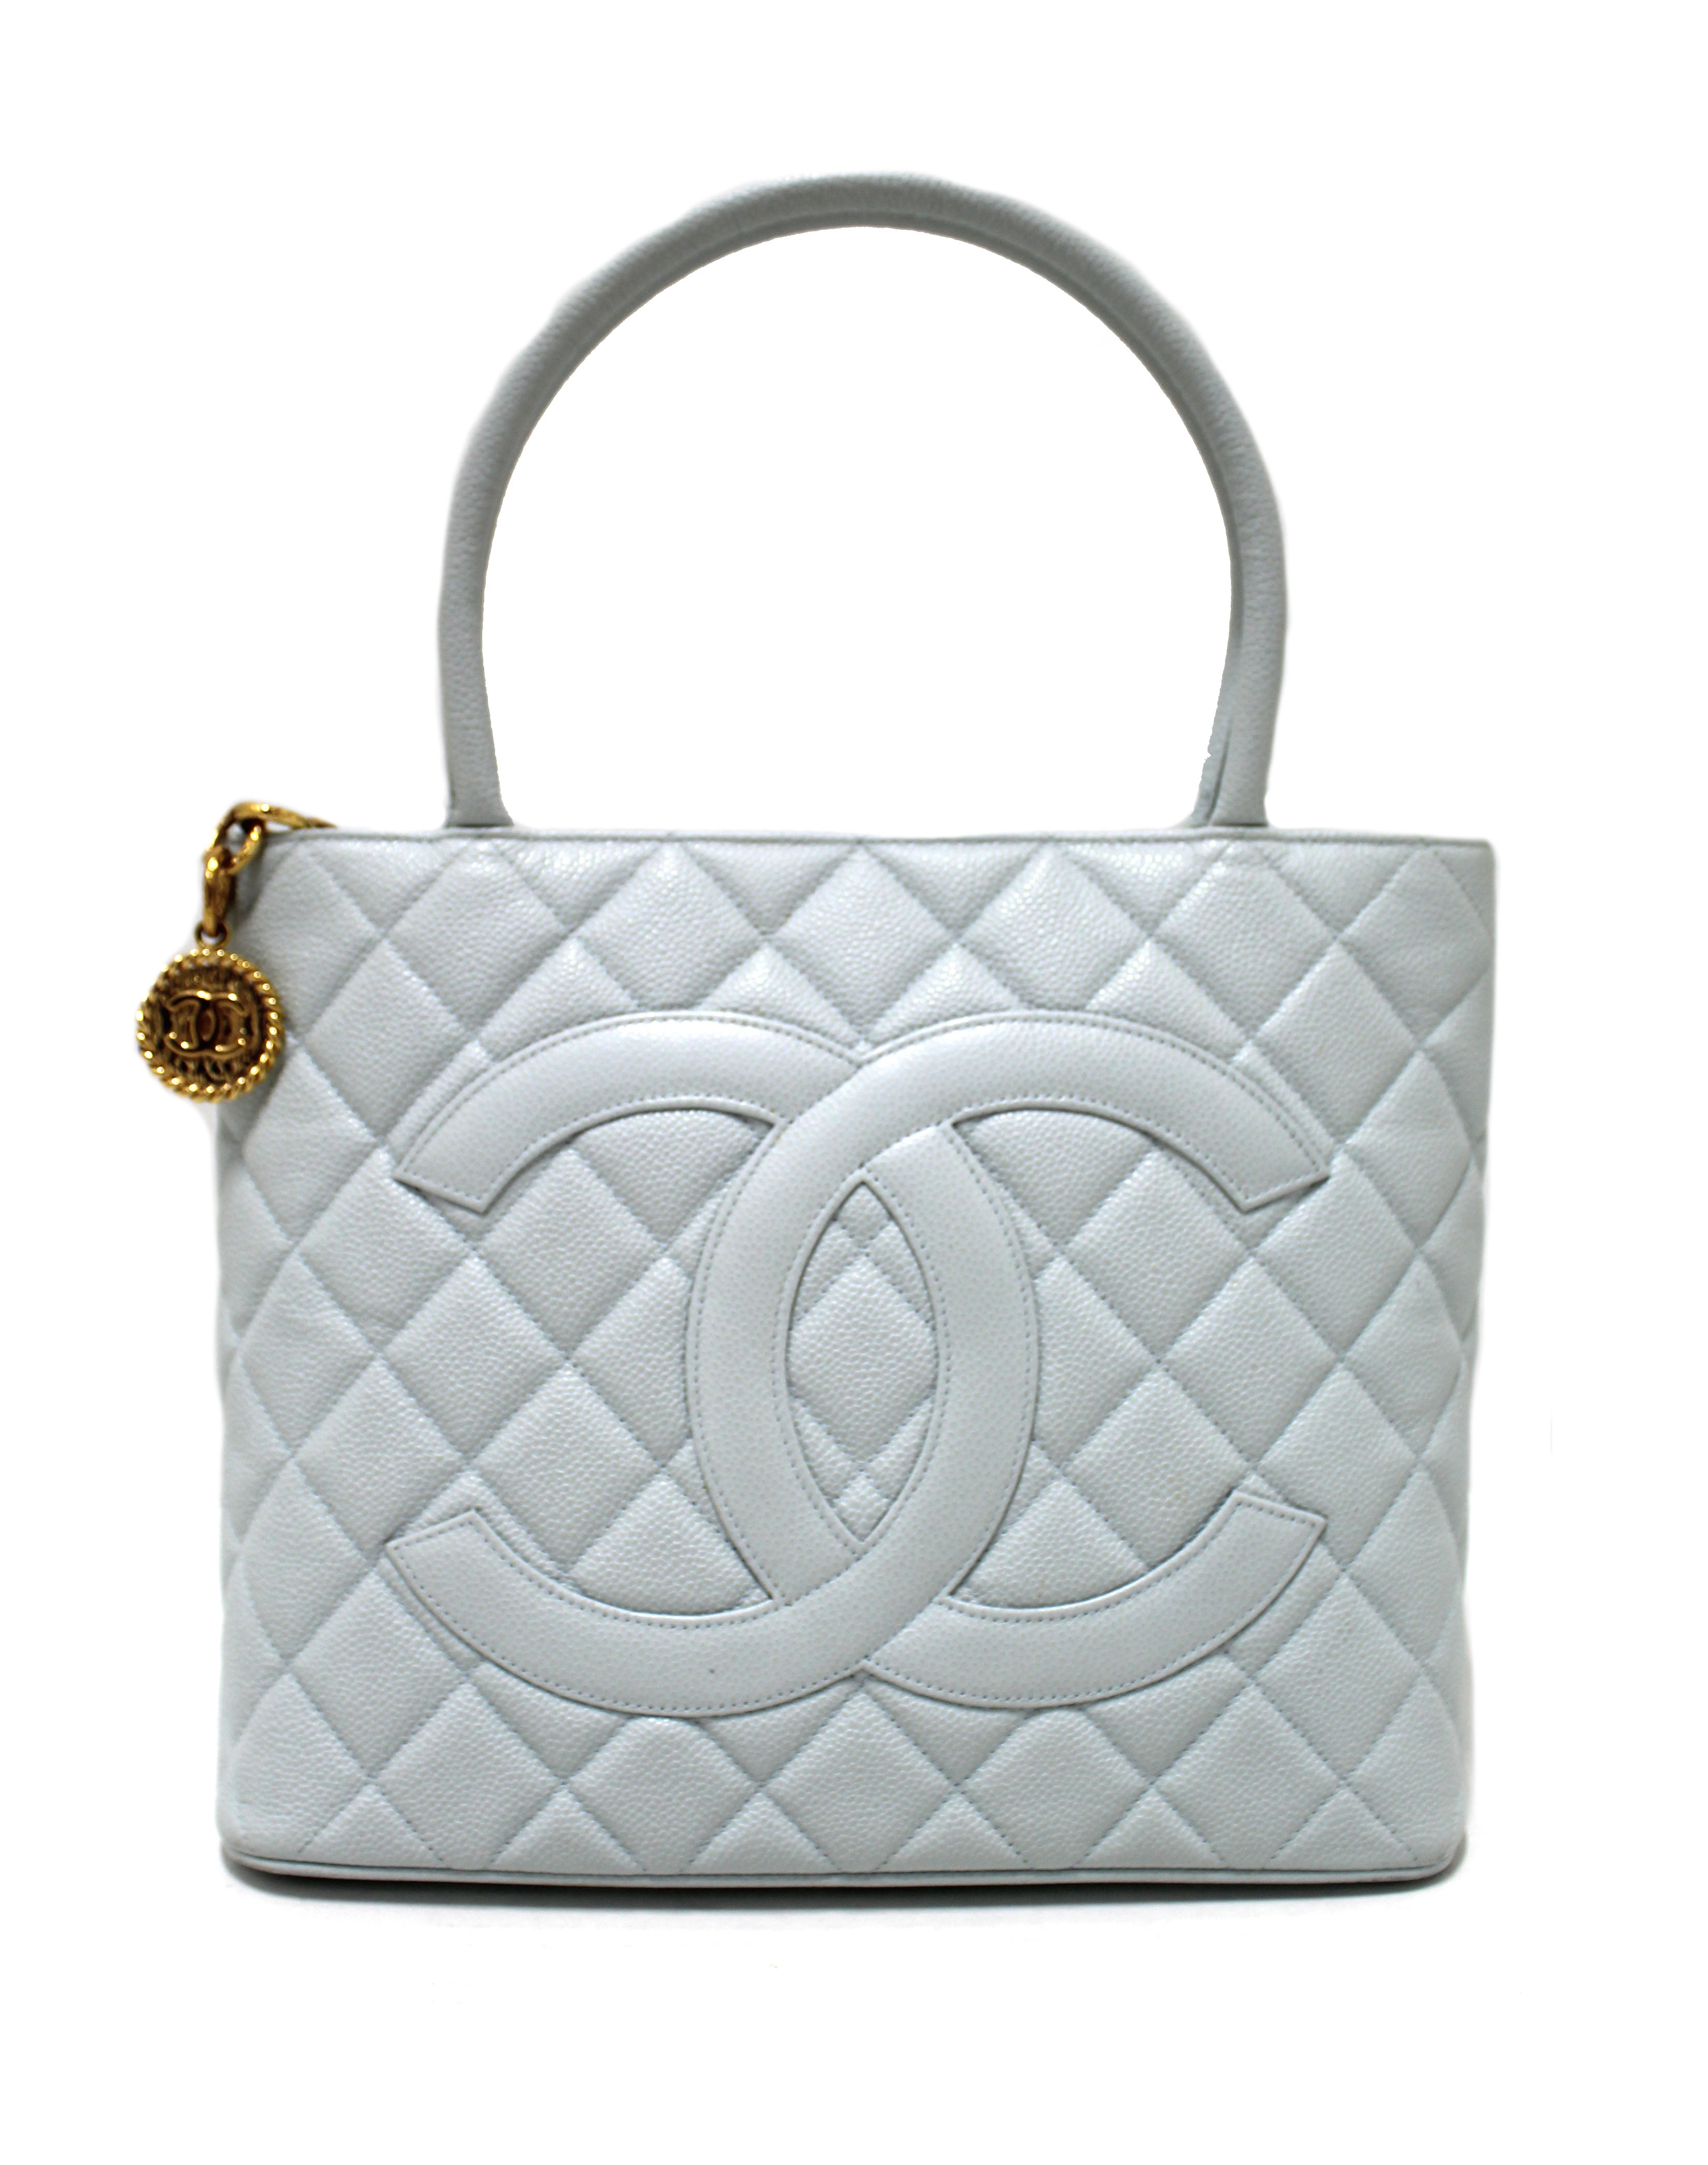 Chanel Medallion bag